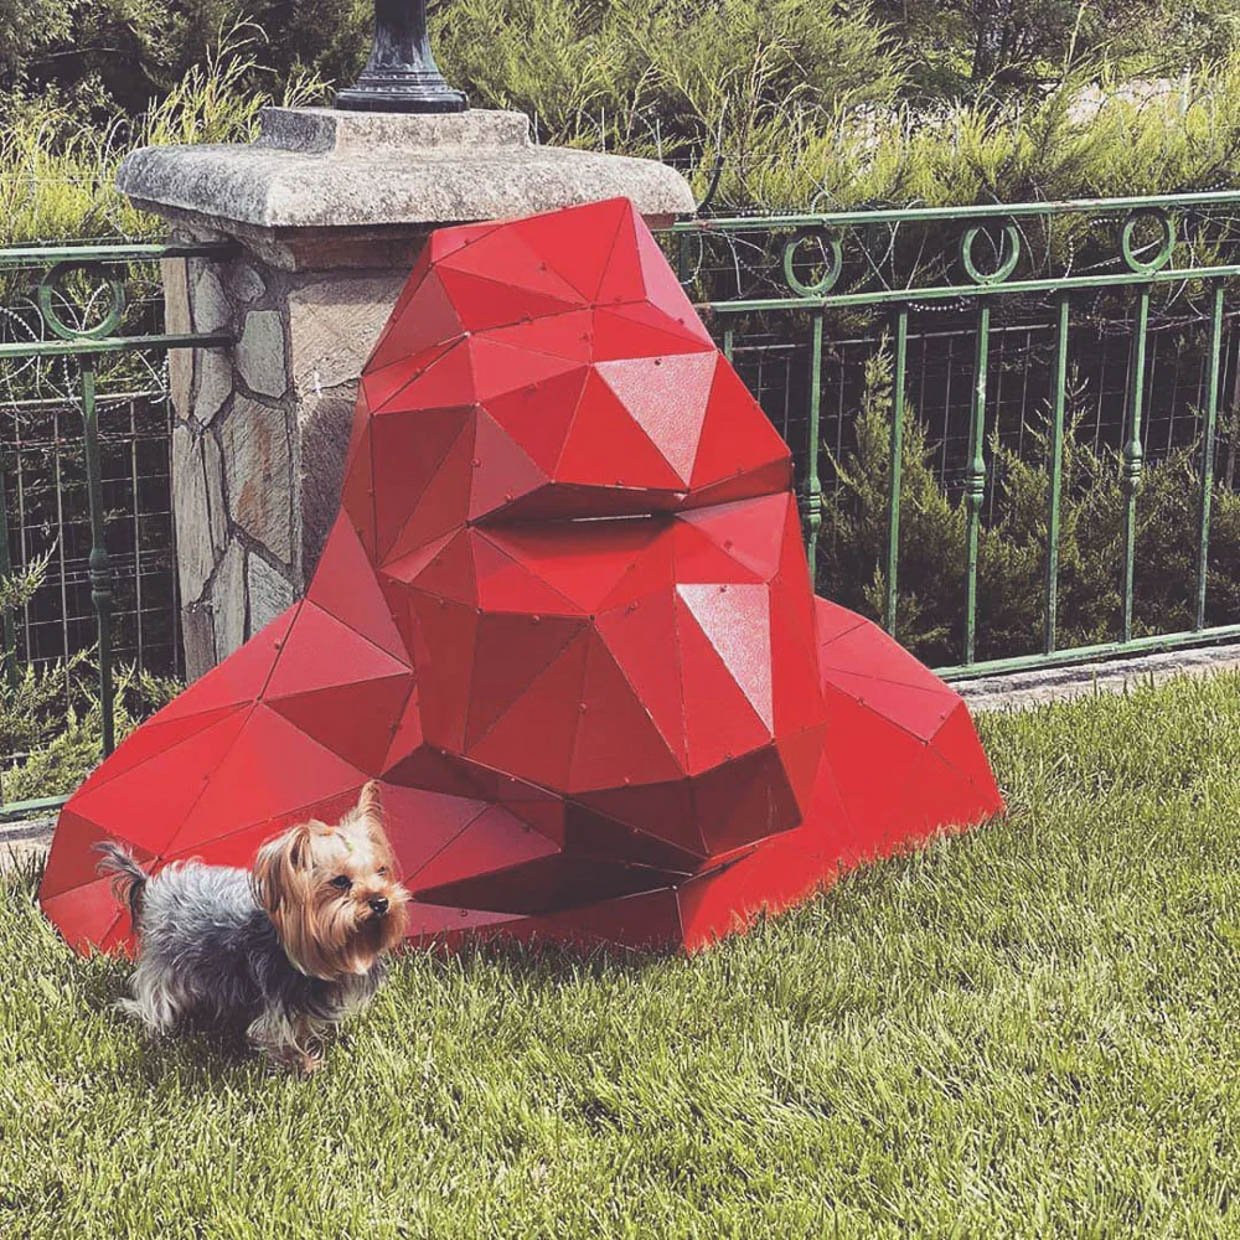 3D XL Geometric Animal Sculptures